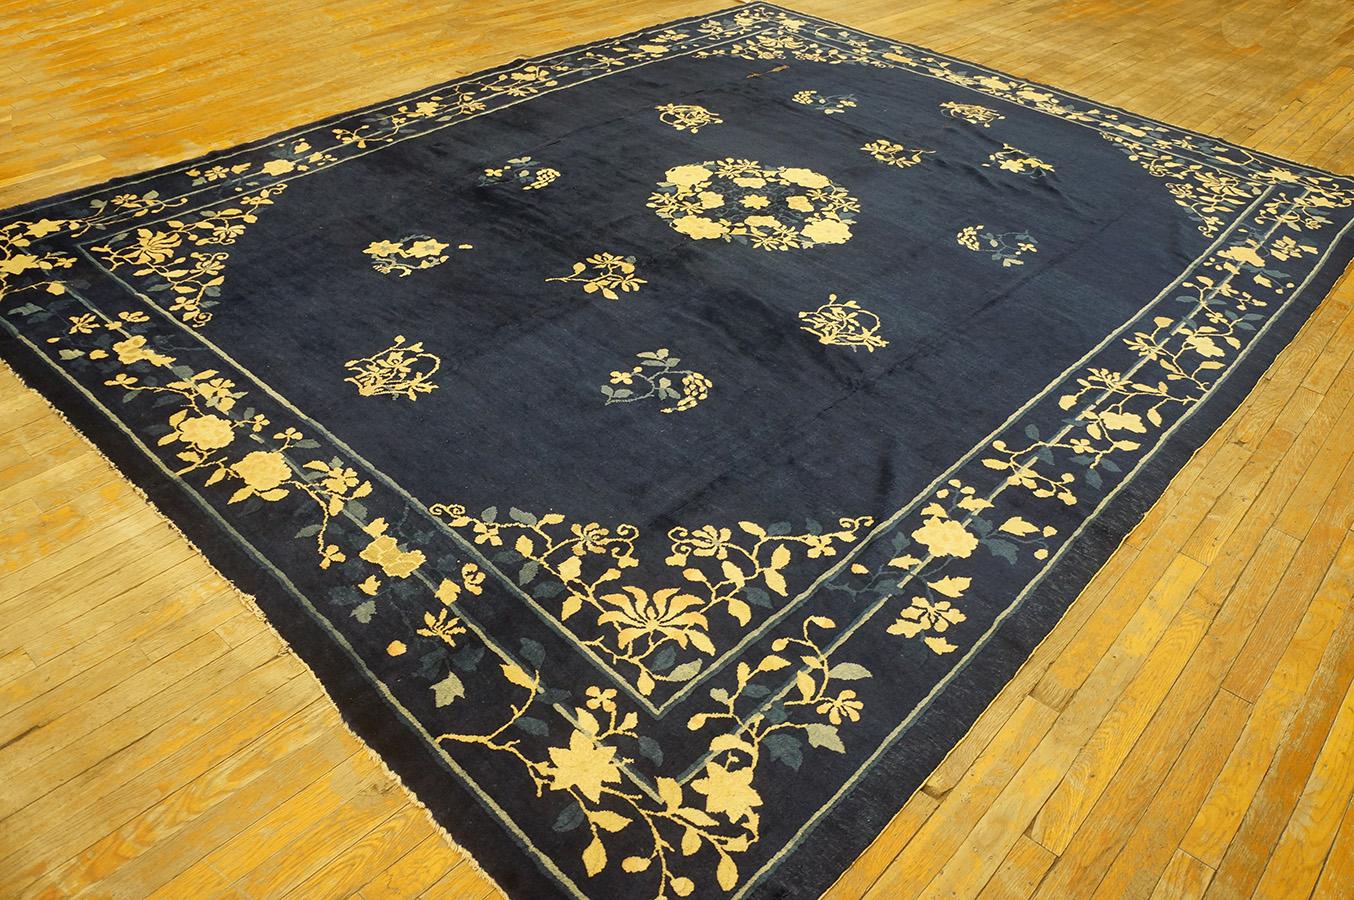 Antique Chinese - Peking rug. Measures: 9' 0'' x 11' 4''.
Navy background.